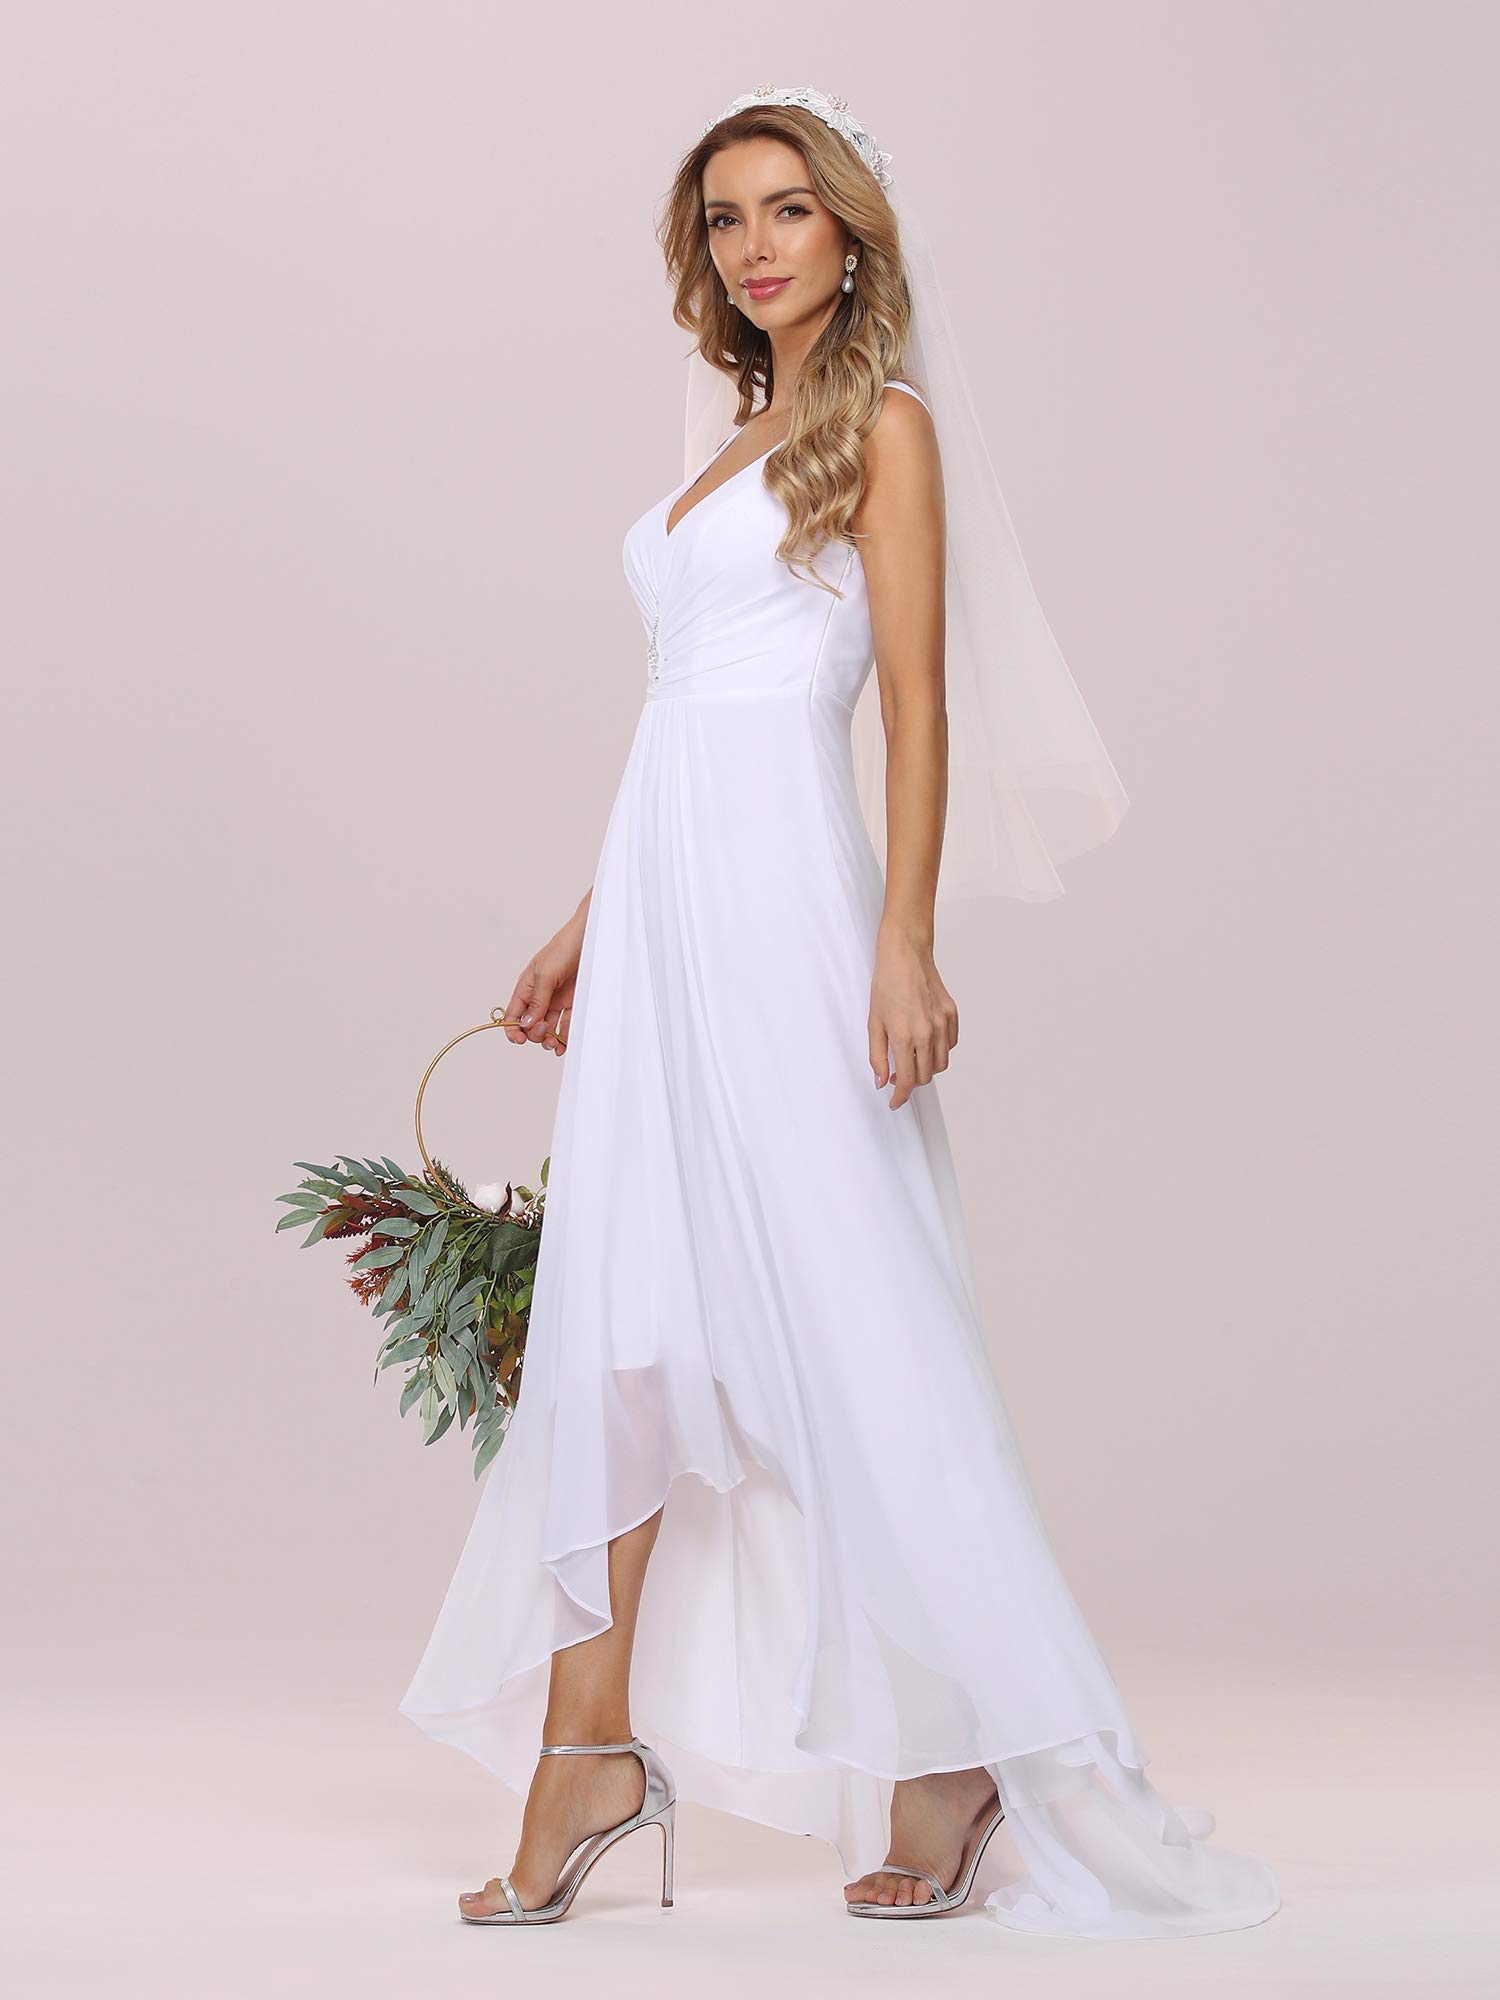 Ever-Pretty Women's High-Low Hemline Simple Chiffon Wedding Dress 9983-EH